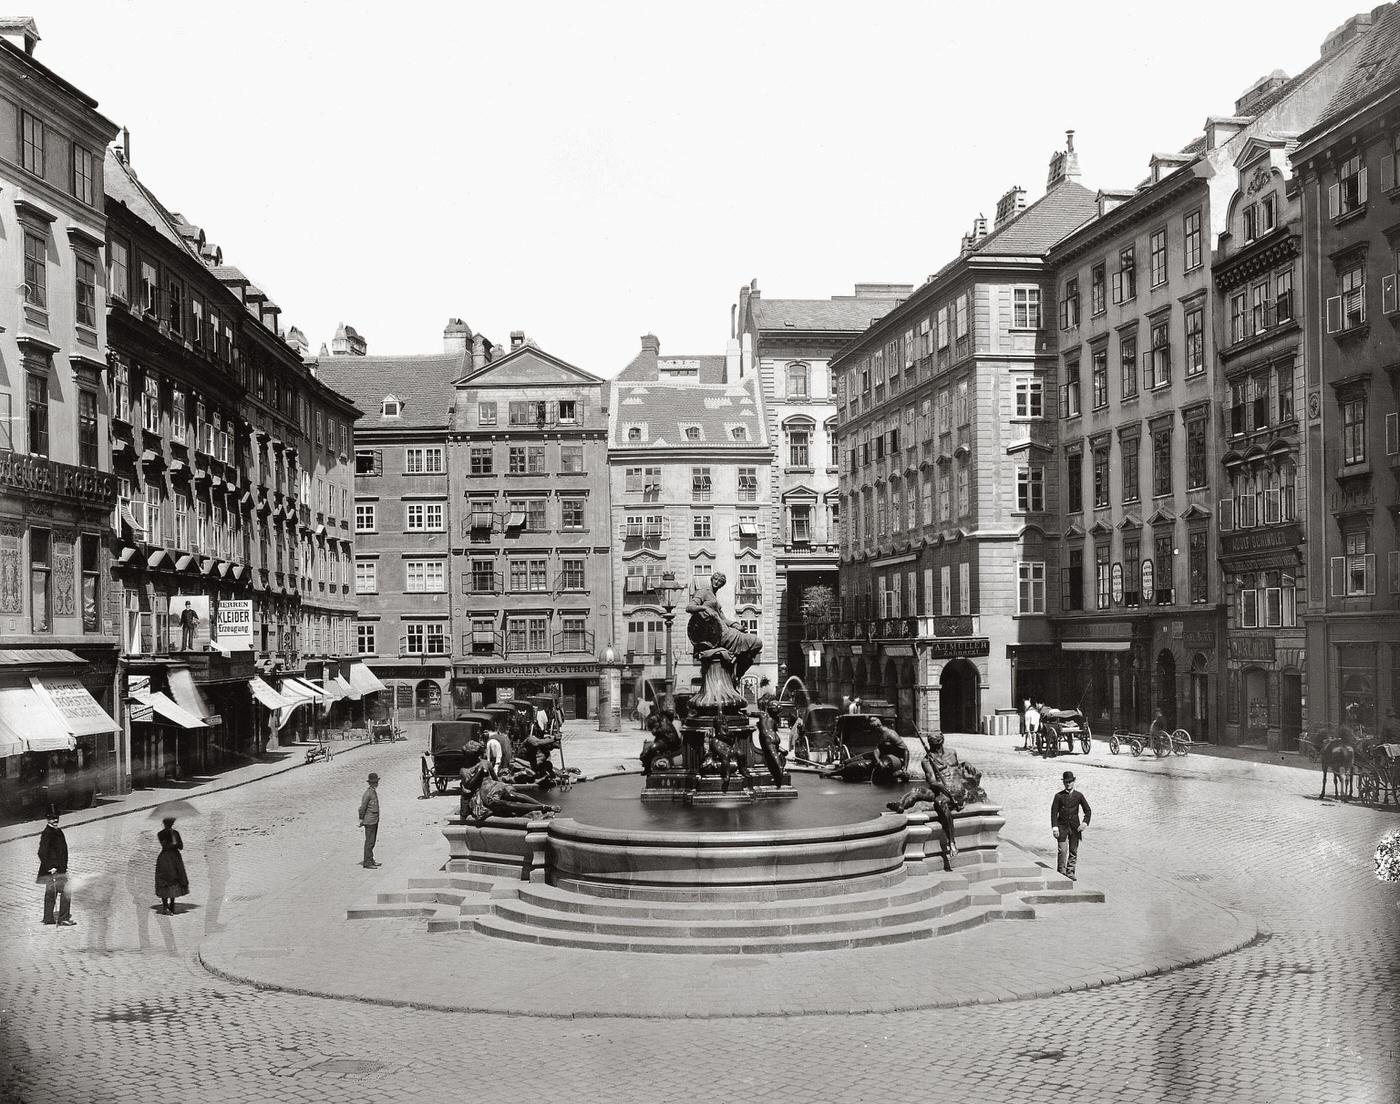 Neuer Markt in Vienna I with "Providentia" fountain, 1902